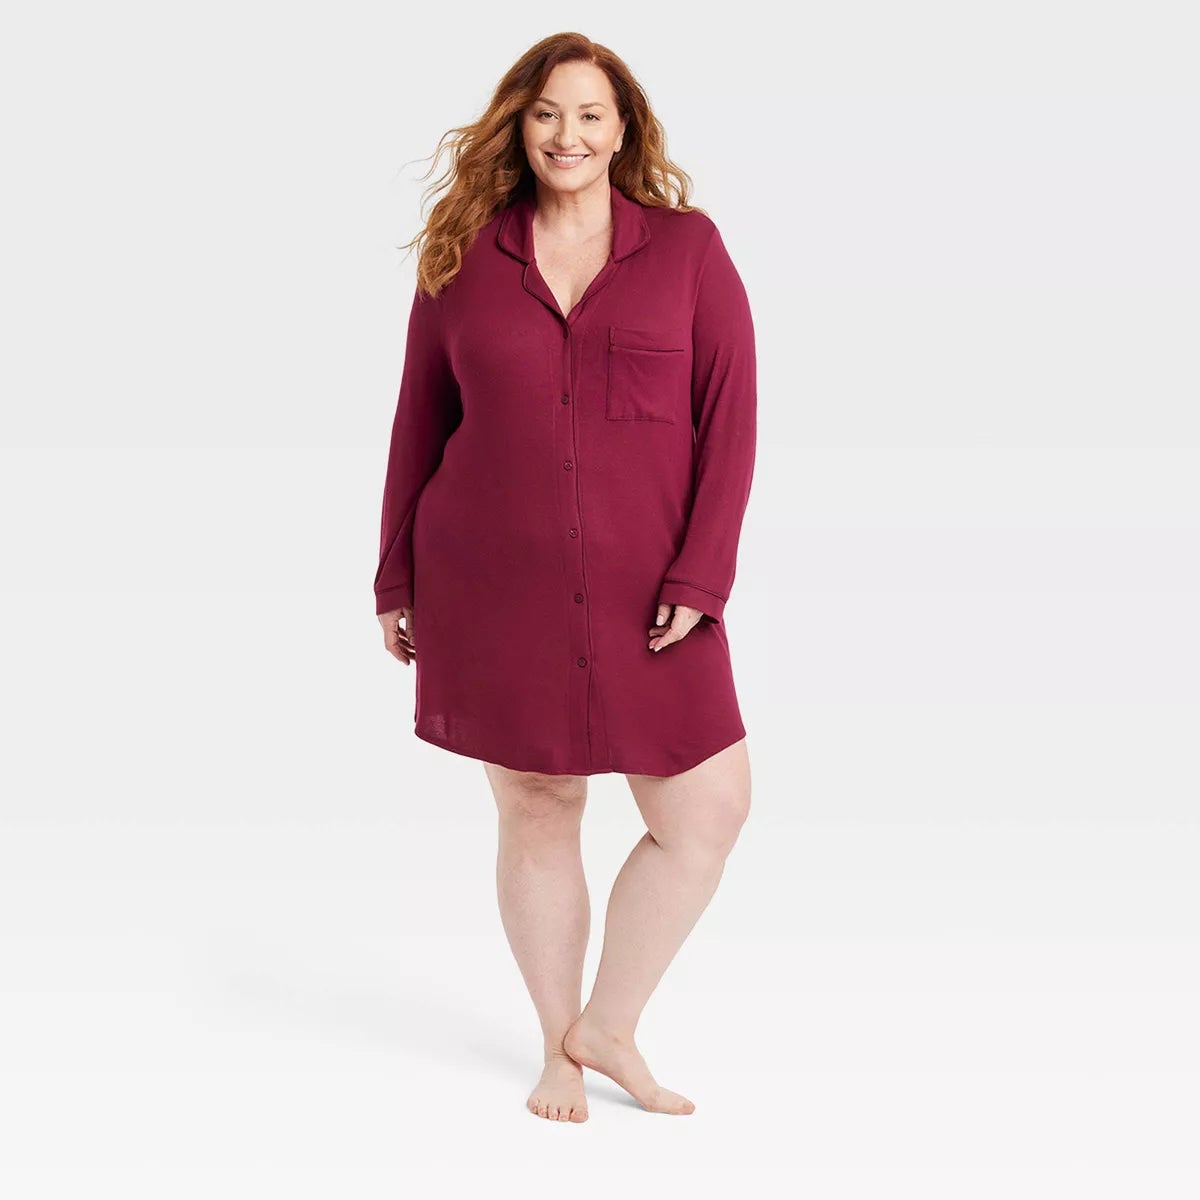 plus size pjs: Women's Pajamas & Sleepwear | Dillard's